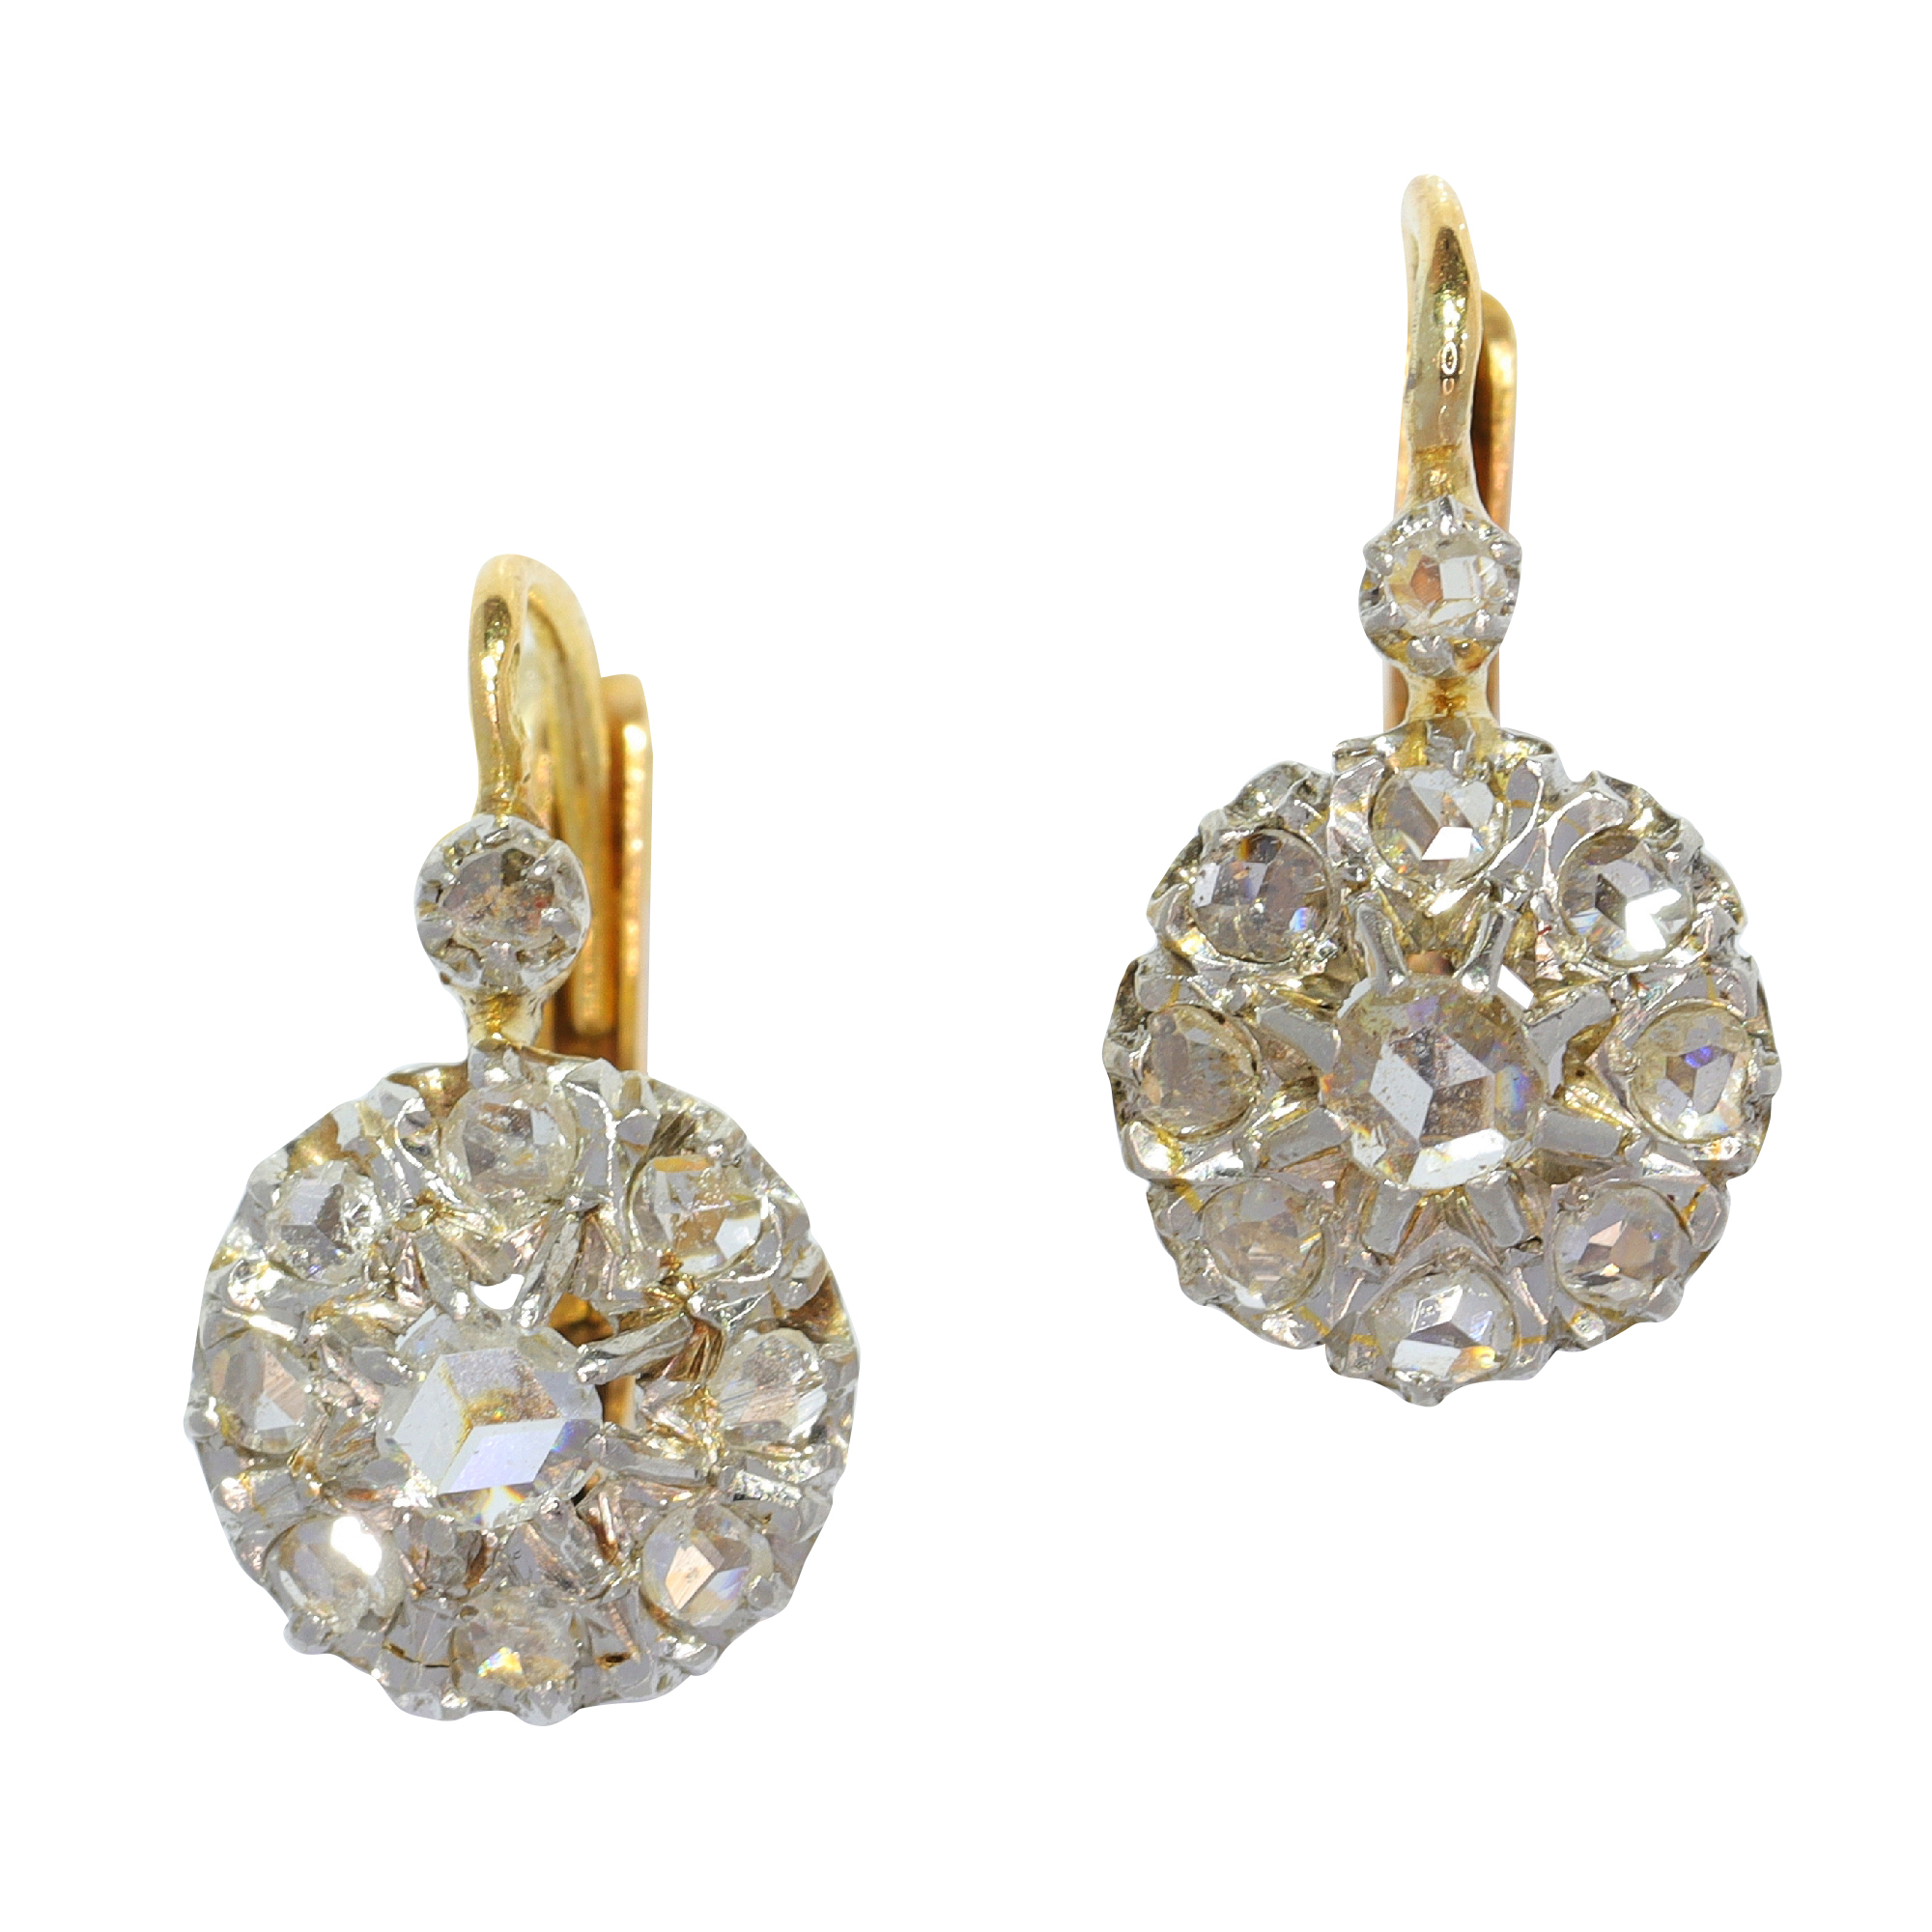 French vintage Belle Epoque Art Deco diamond earrings